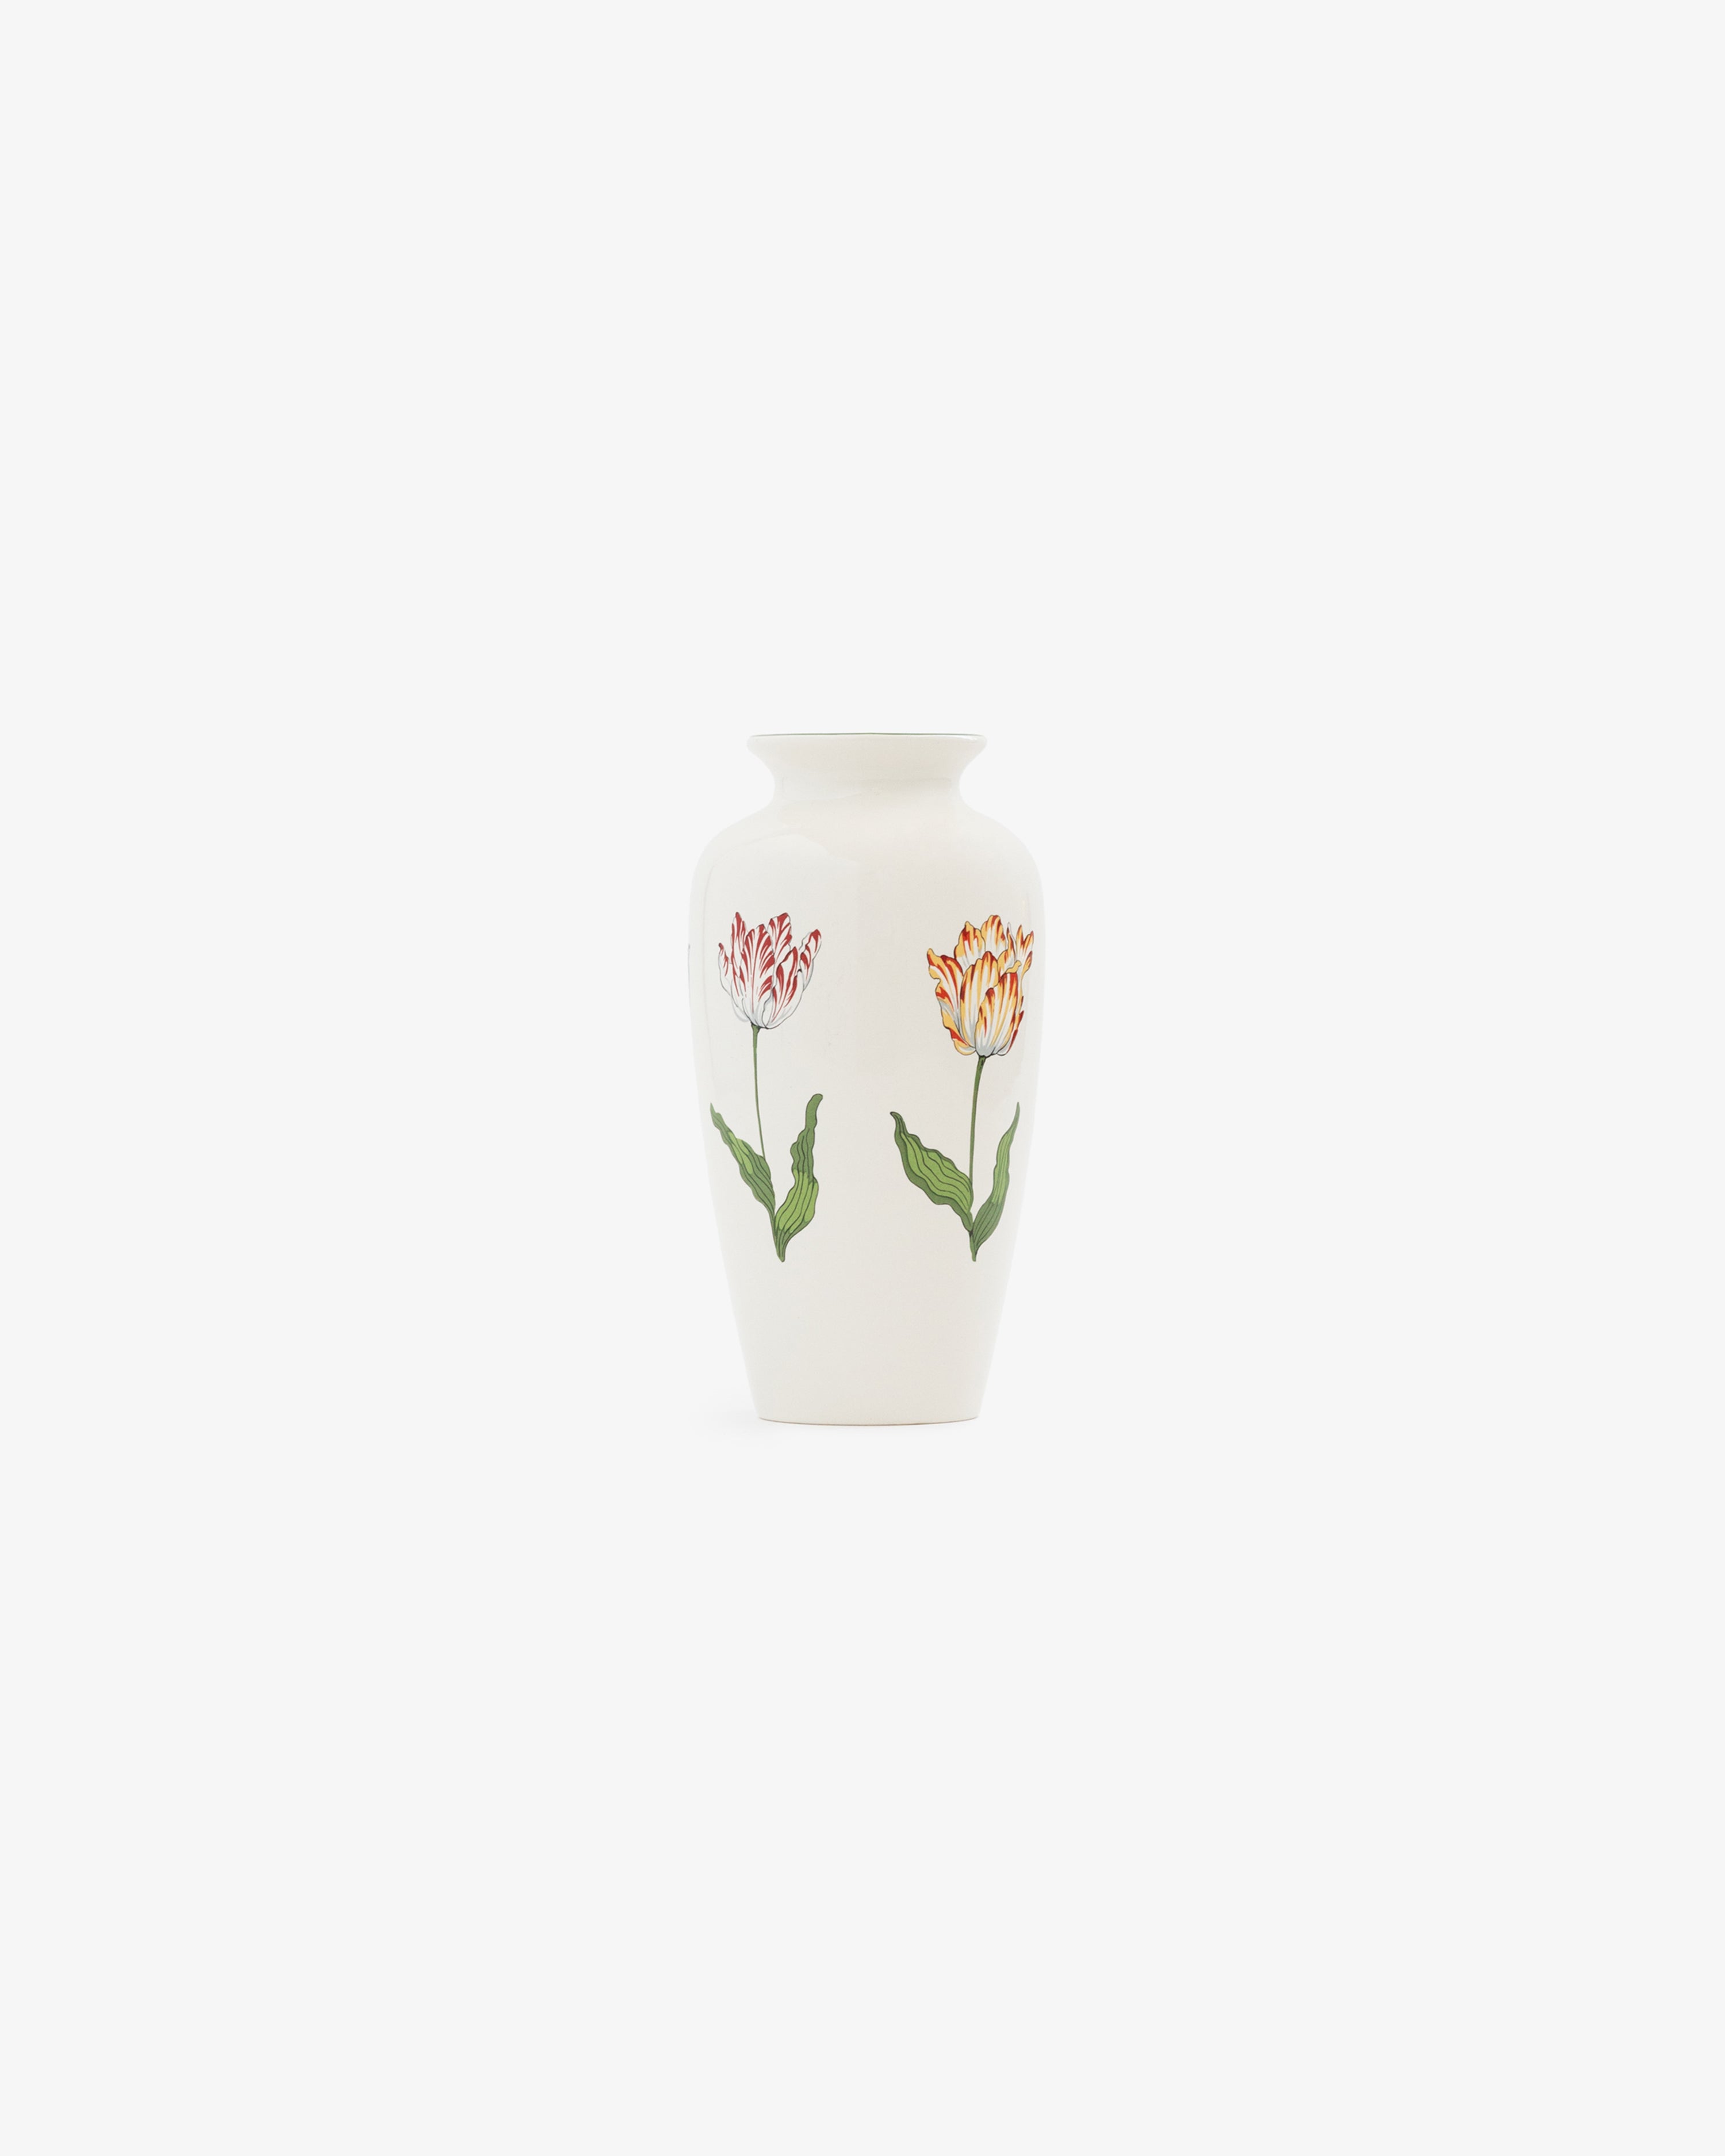 Tiffany & Co. "Tiffany Tulips" Porcelain Vase